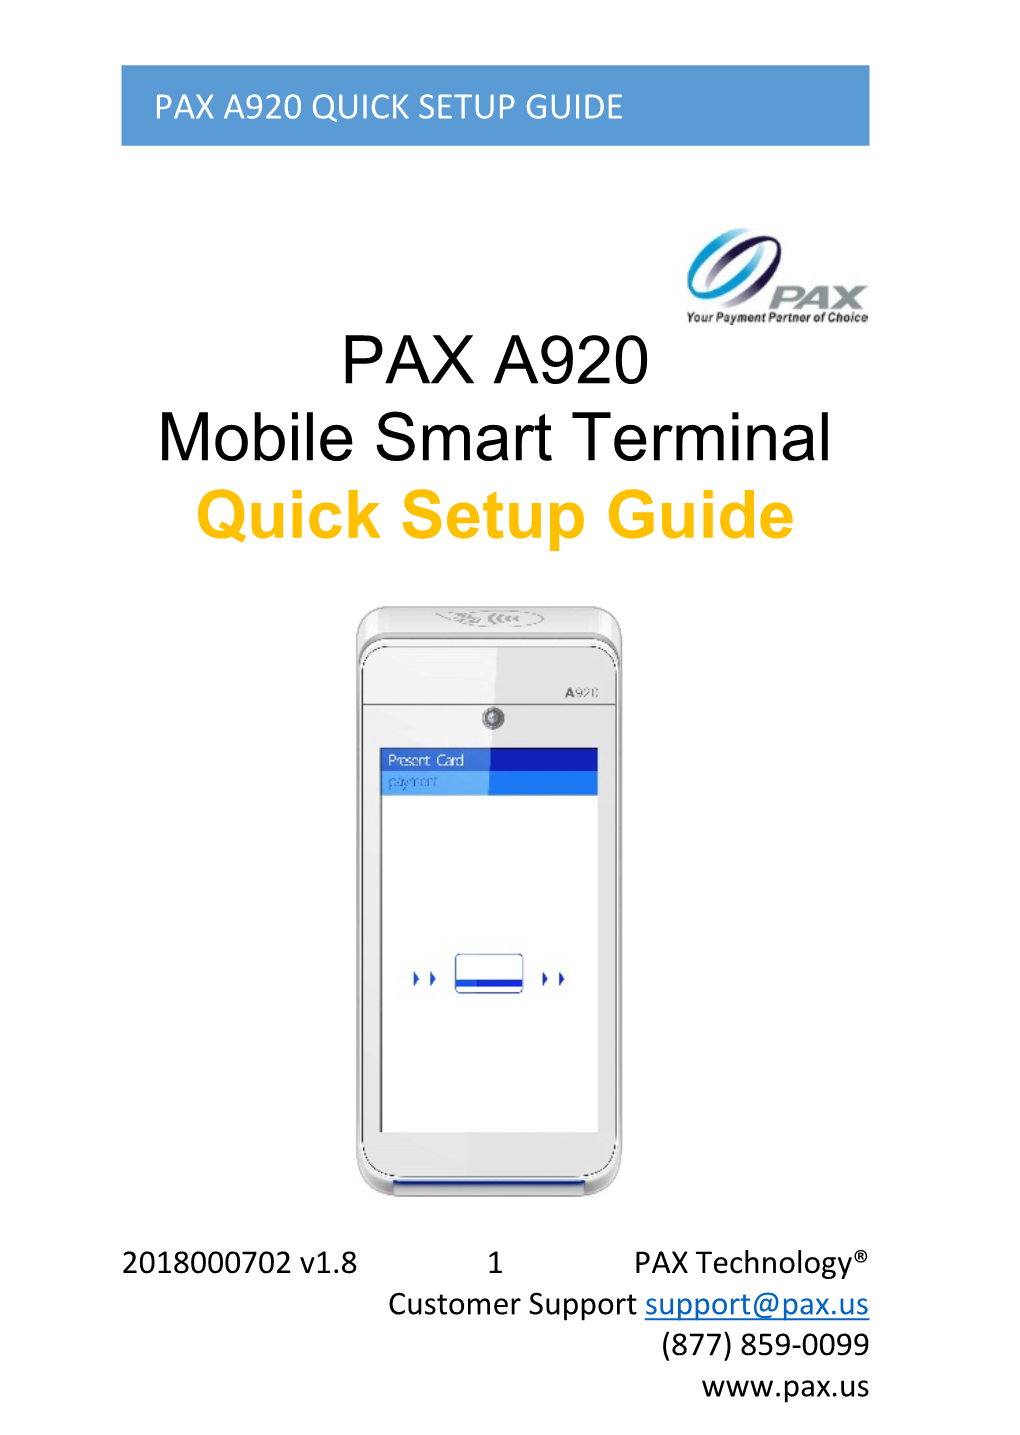 PAX A920 Mobile Smart Terminal Quick Setup Guide